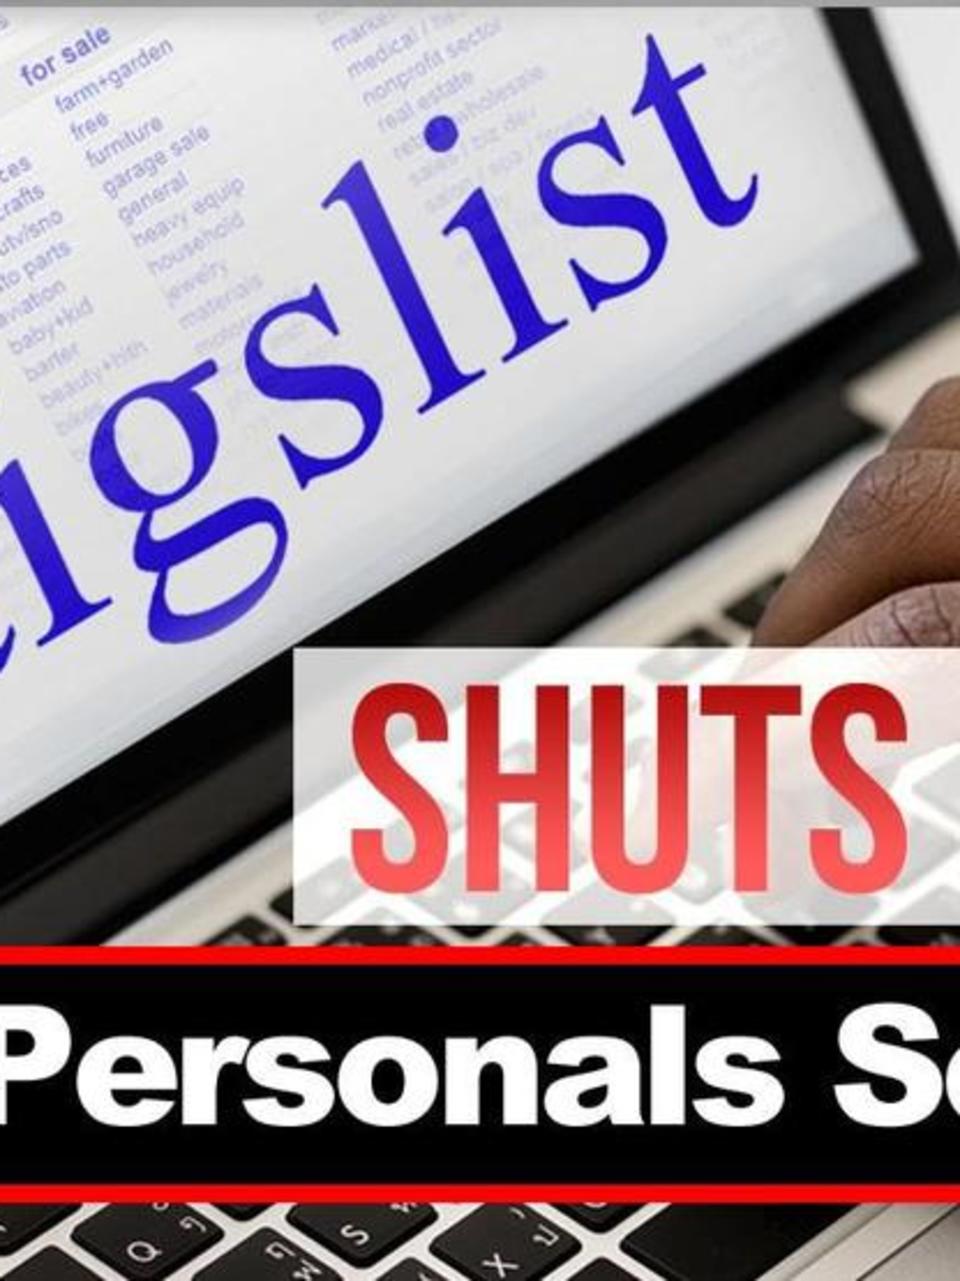 Craiglist Shuts Down Personal Ads But A Little Rock Organization